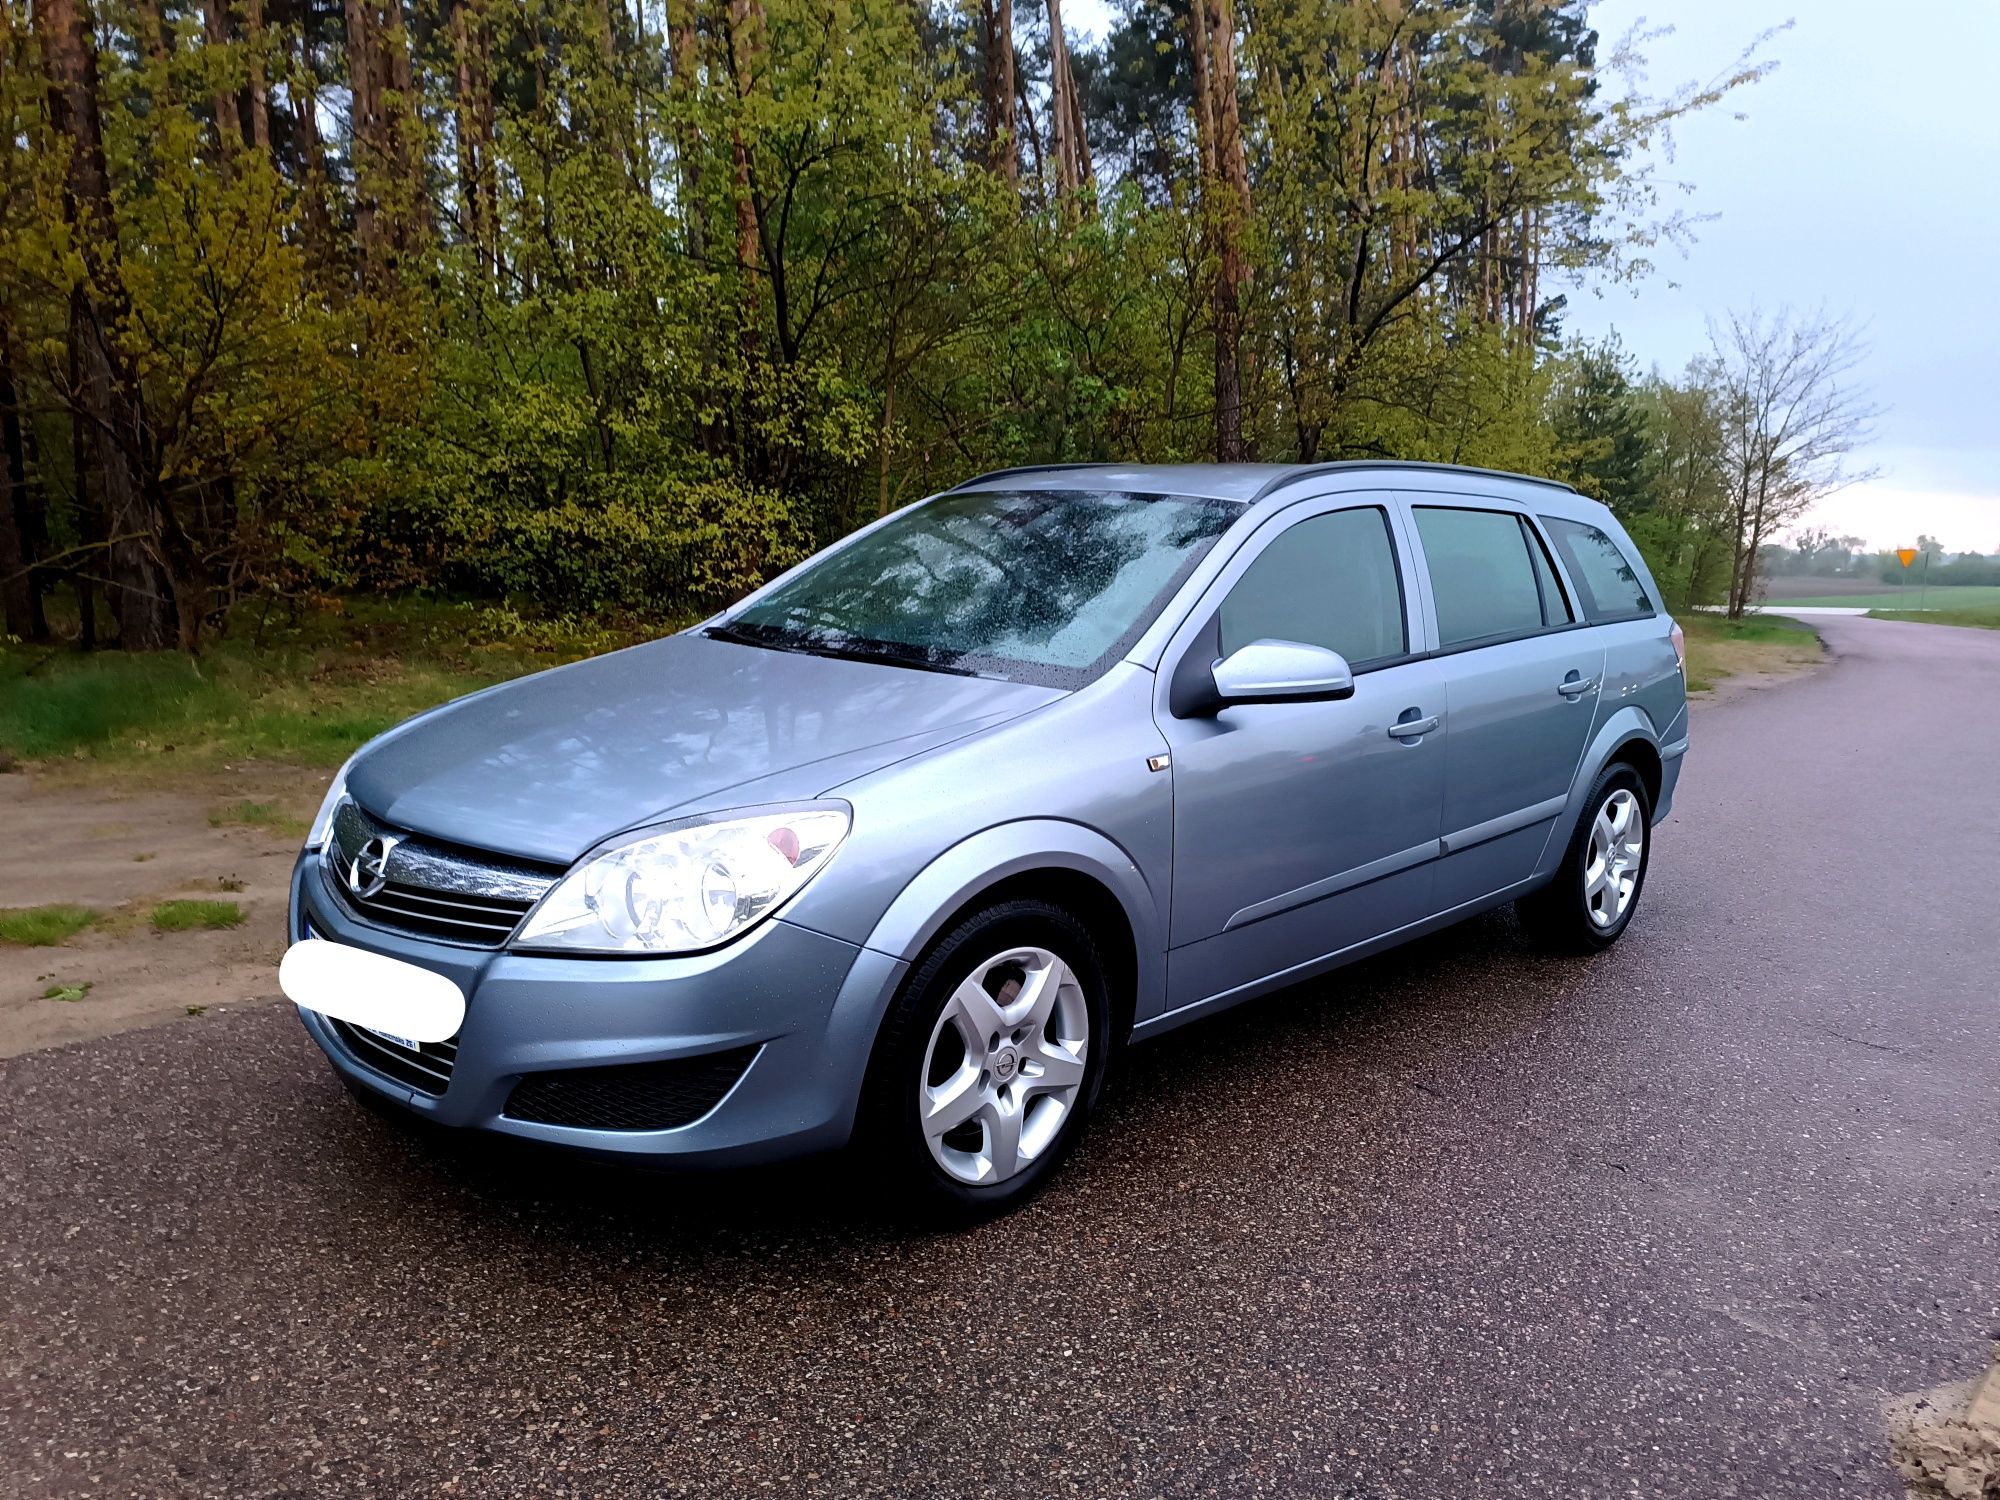 Opel Astra H 1.9 CDTI 2008r